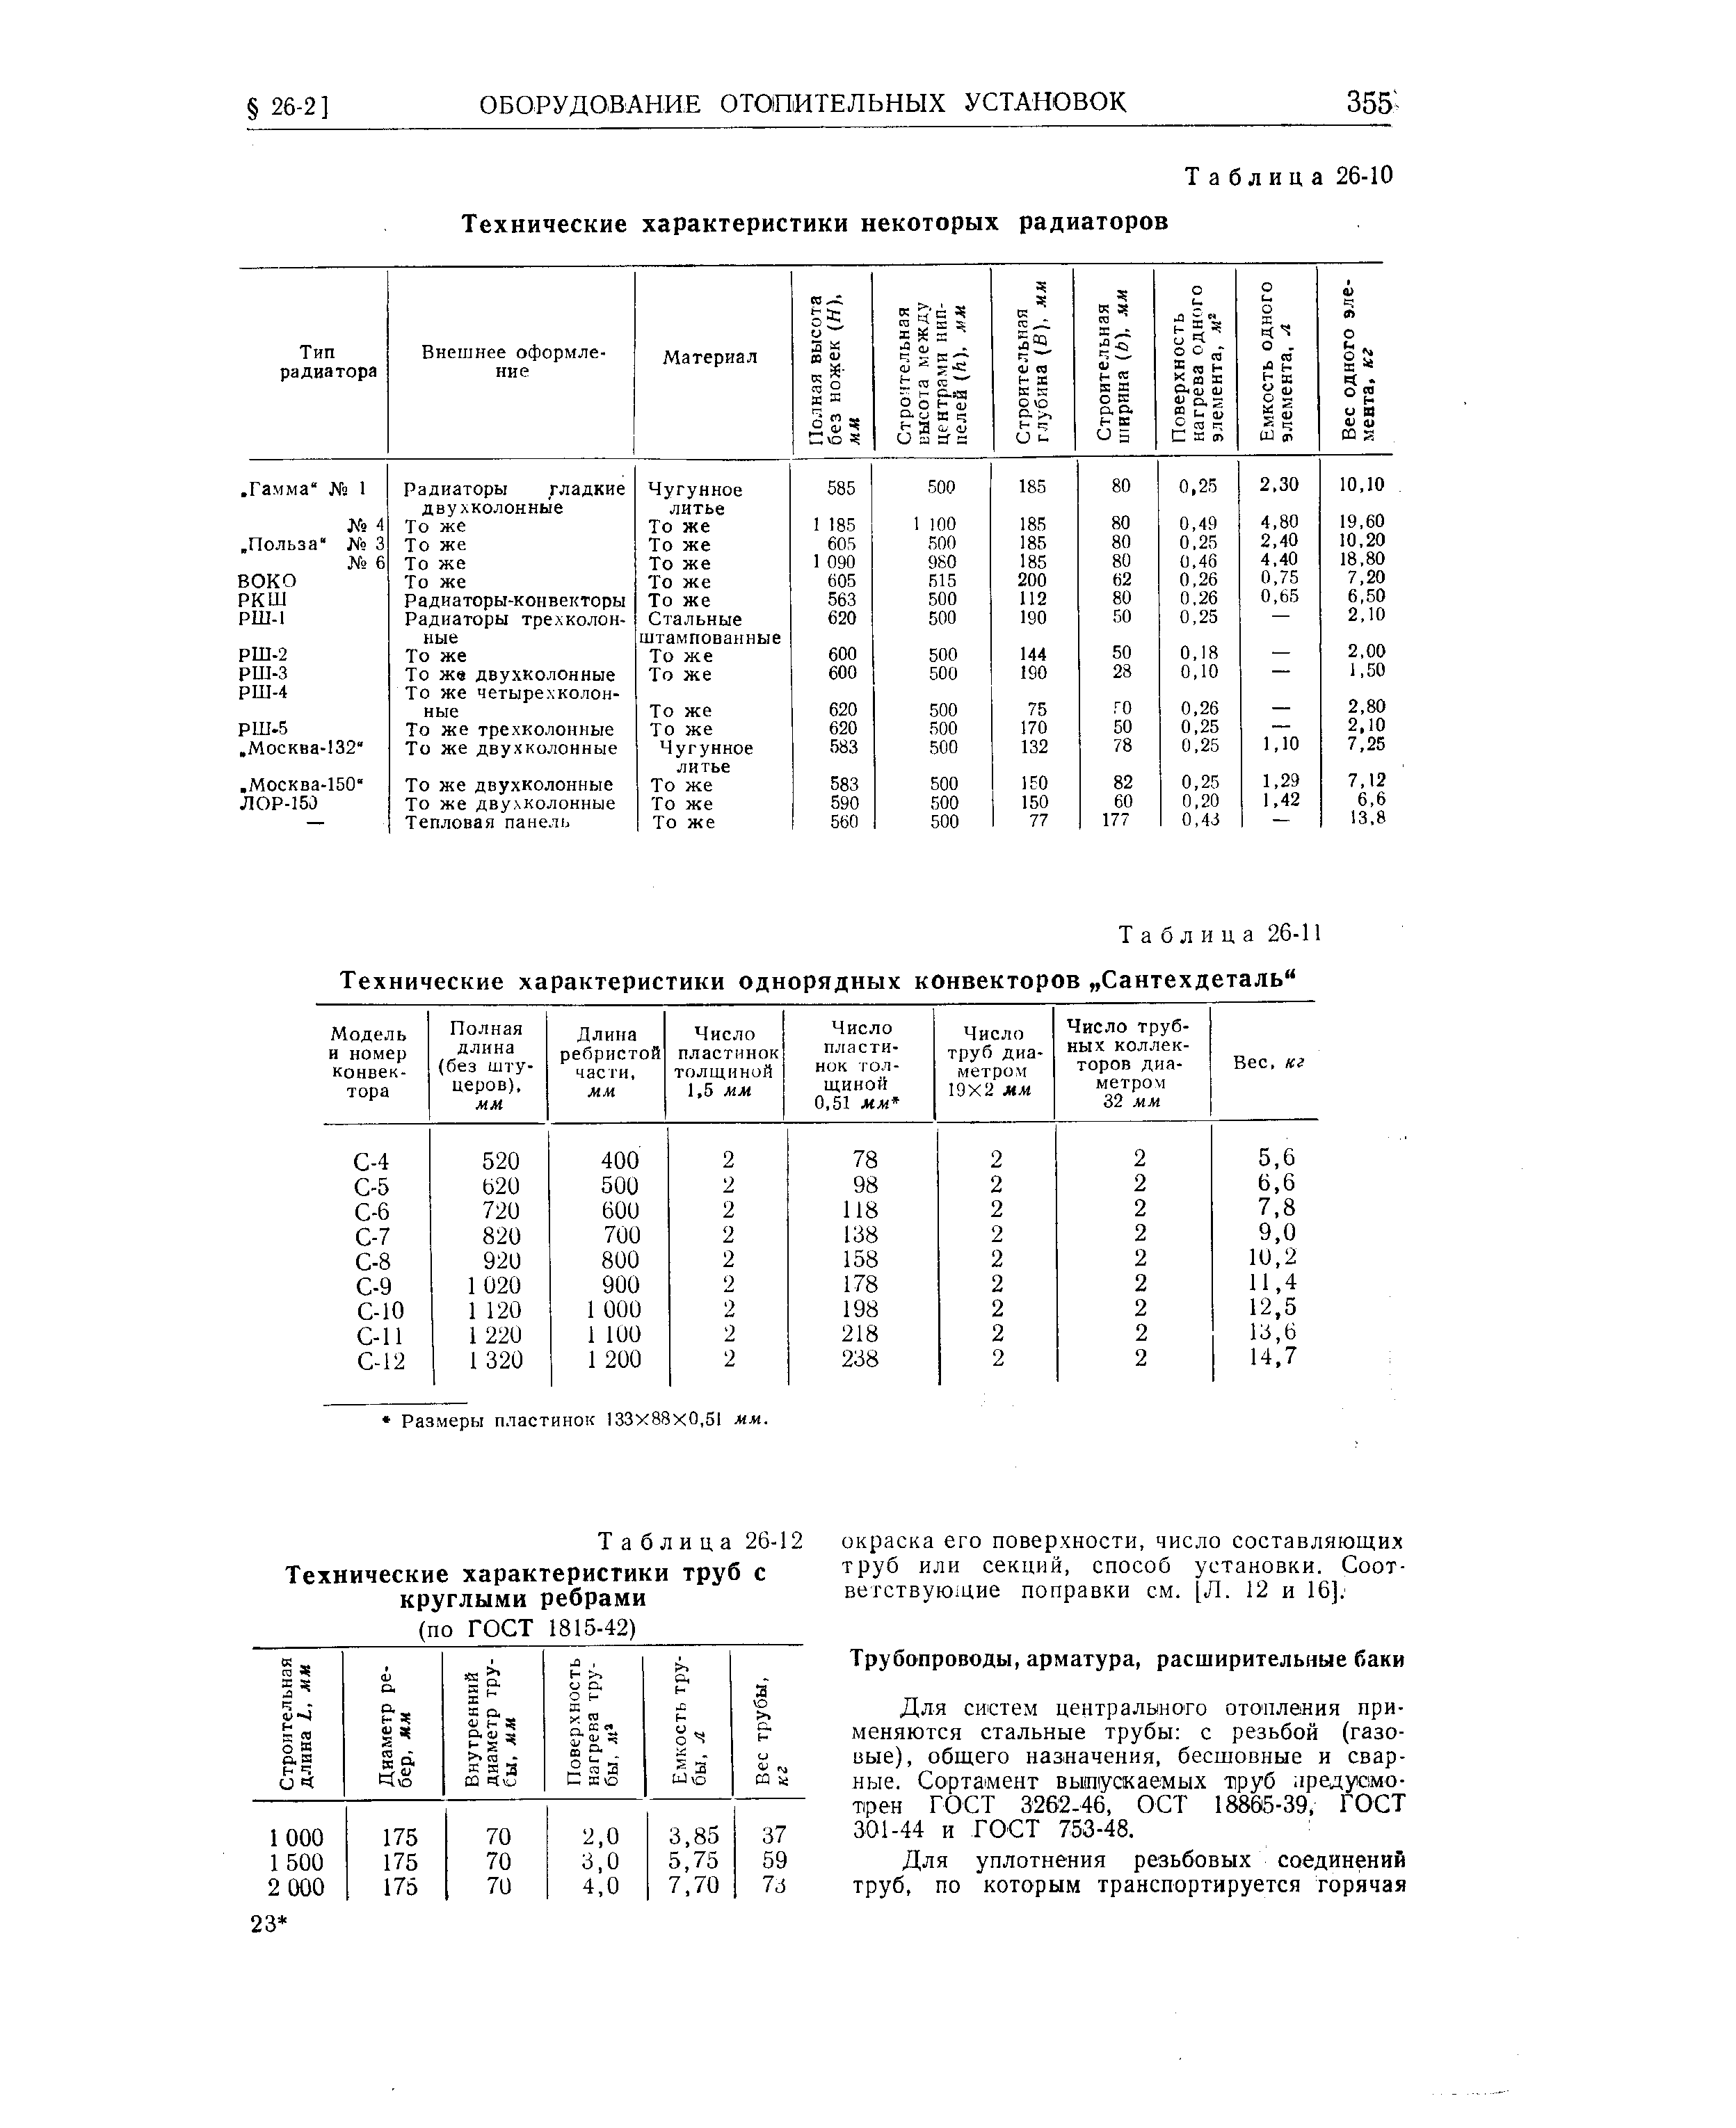 Таблица 26-12 Технические характеристики труб с круглыми ребрами (по ГОСТ 1815-42)
